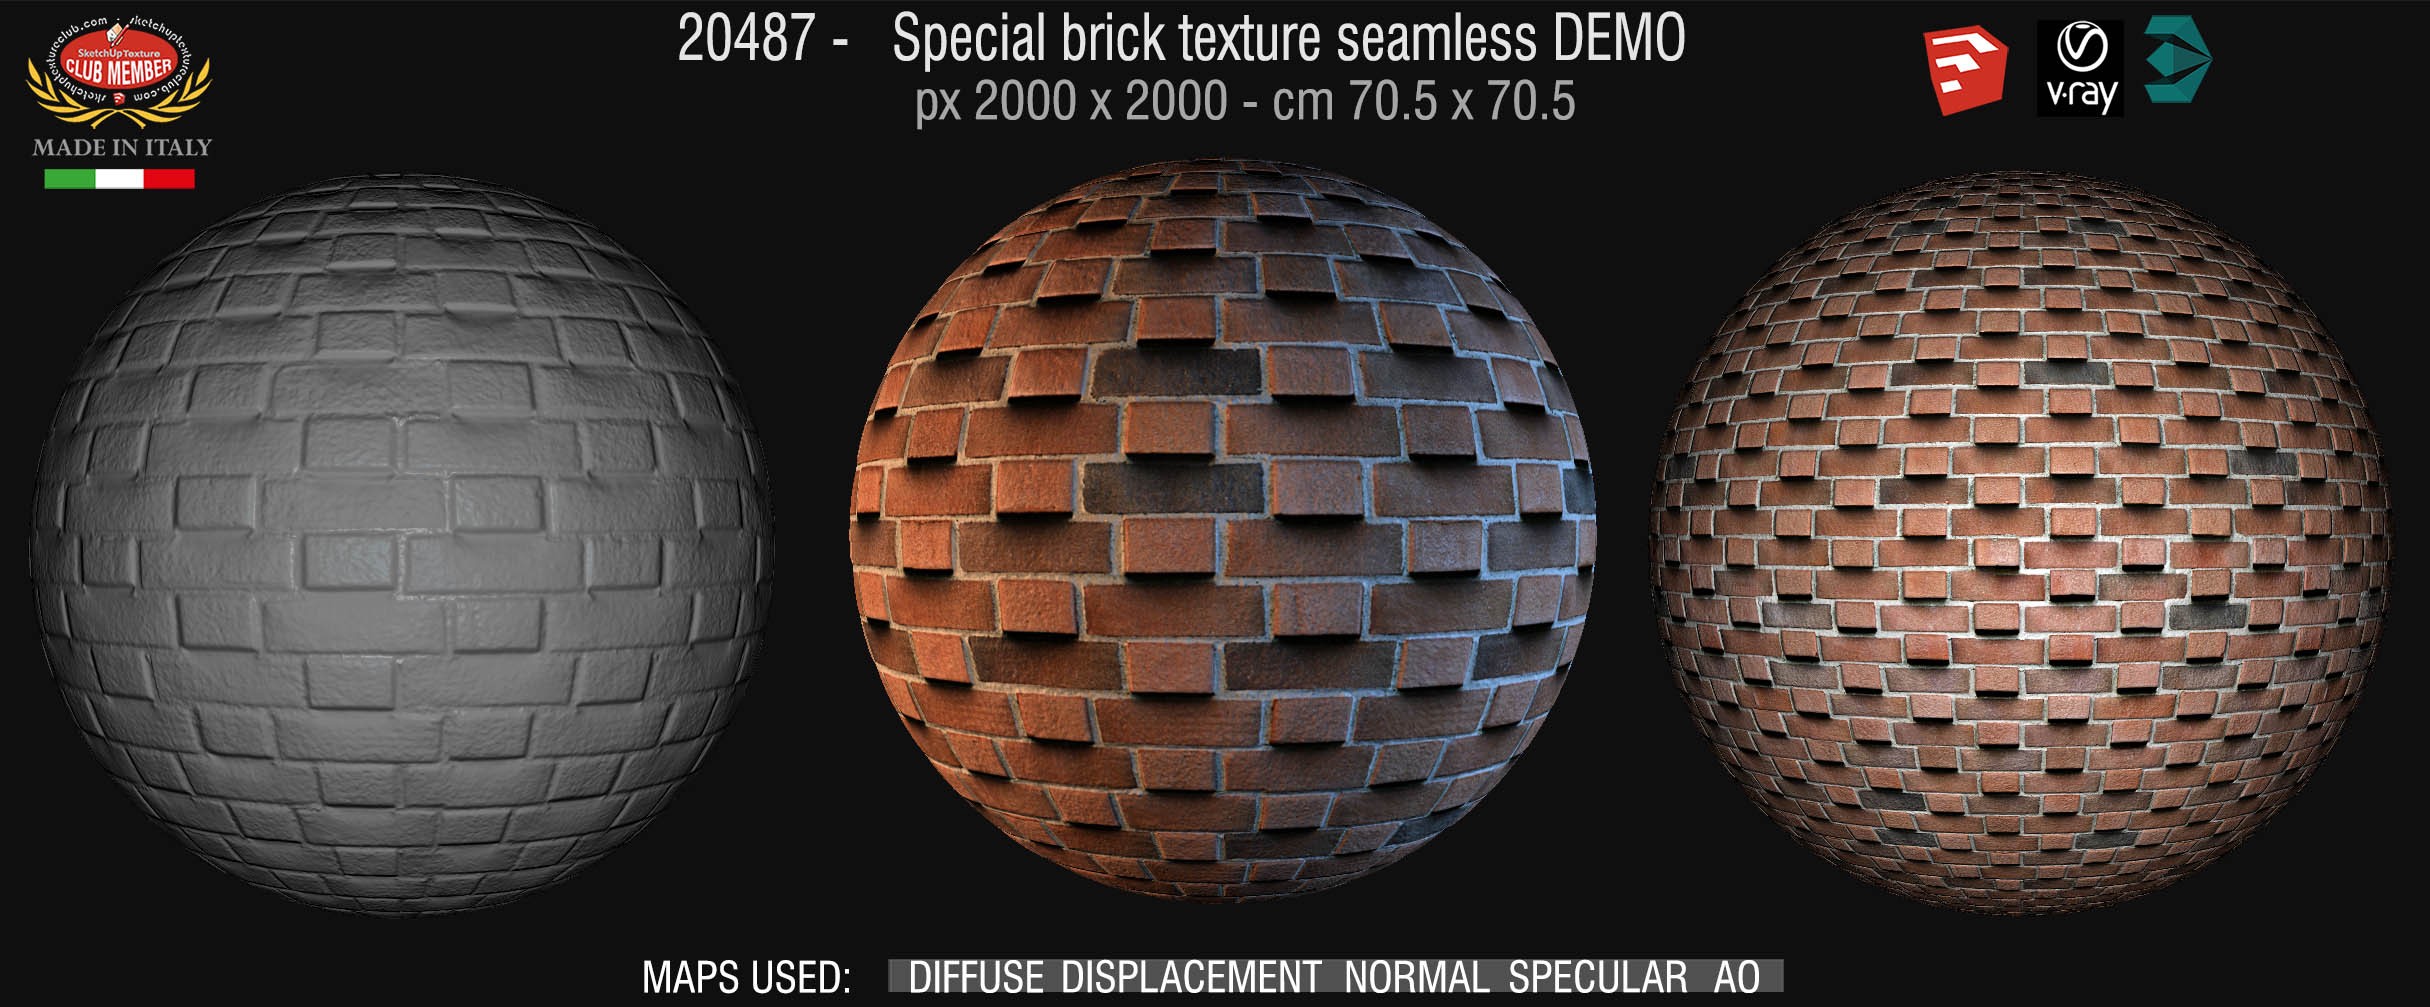 20487 Special brick texture seamless + maps DEMO